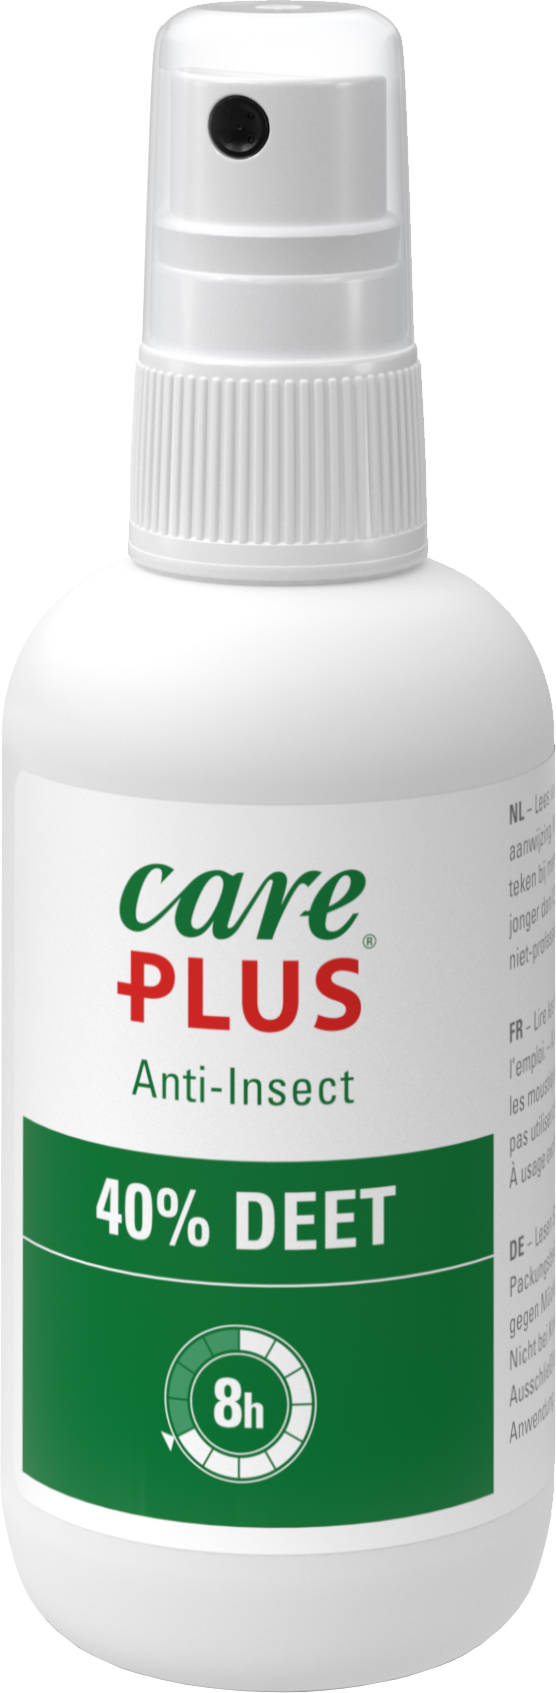 Care Plus Anti-Insect DEET 40% 100 ml Nocolour